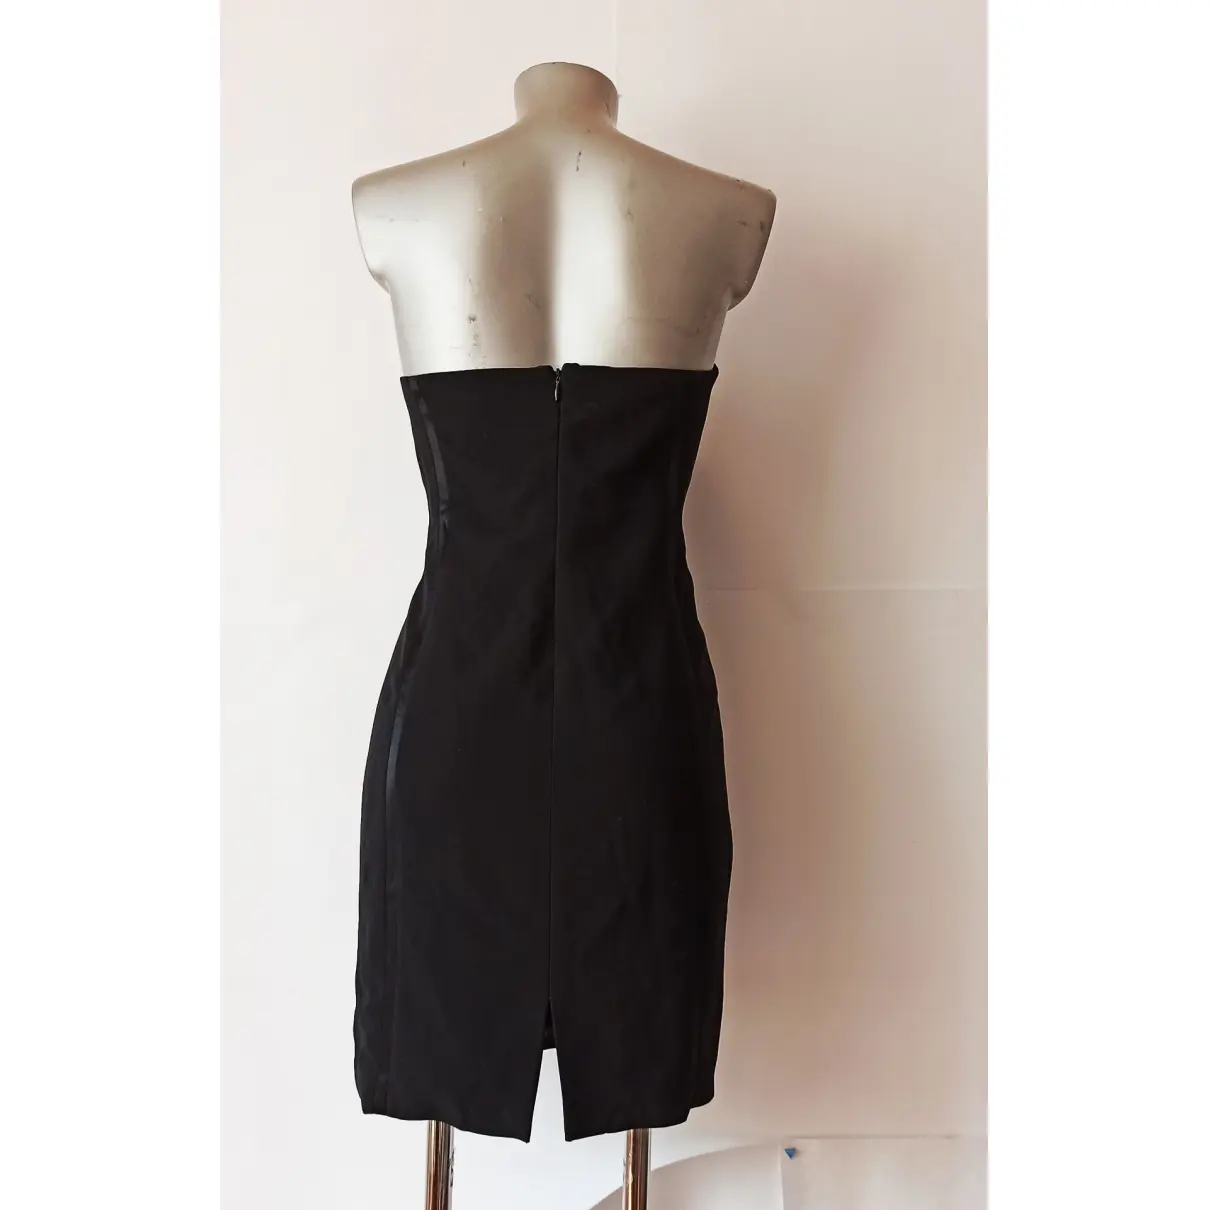 Buy Black Tie Oleg Cassini Mini dress online